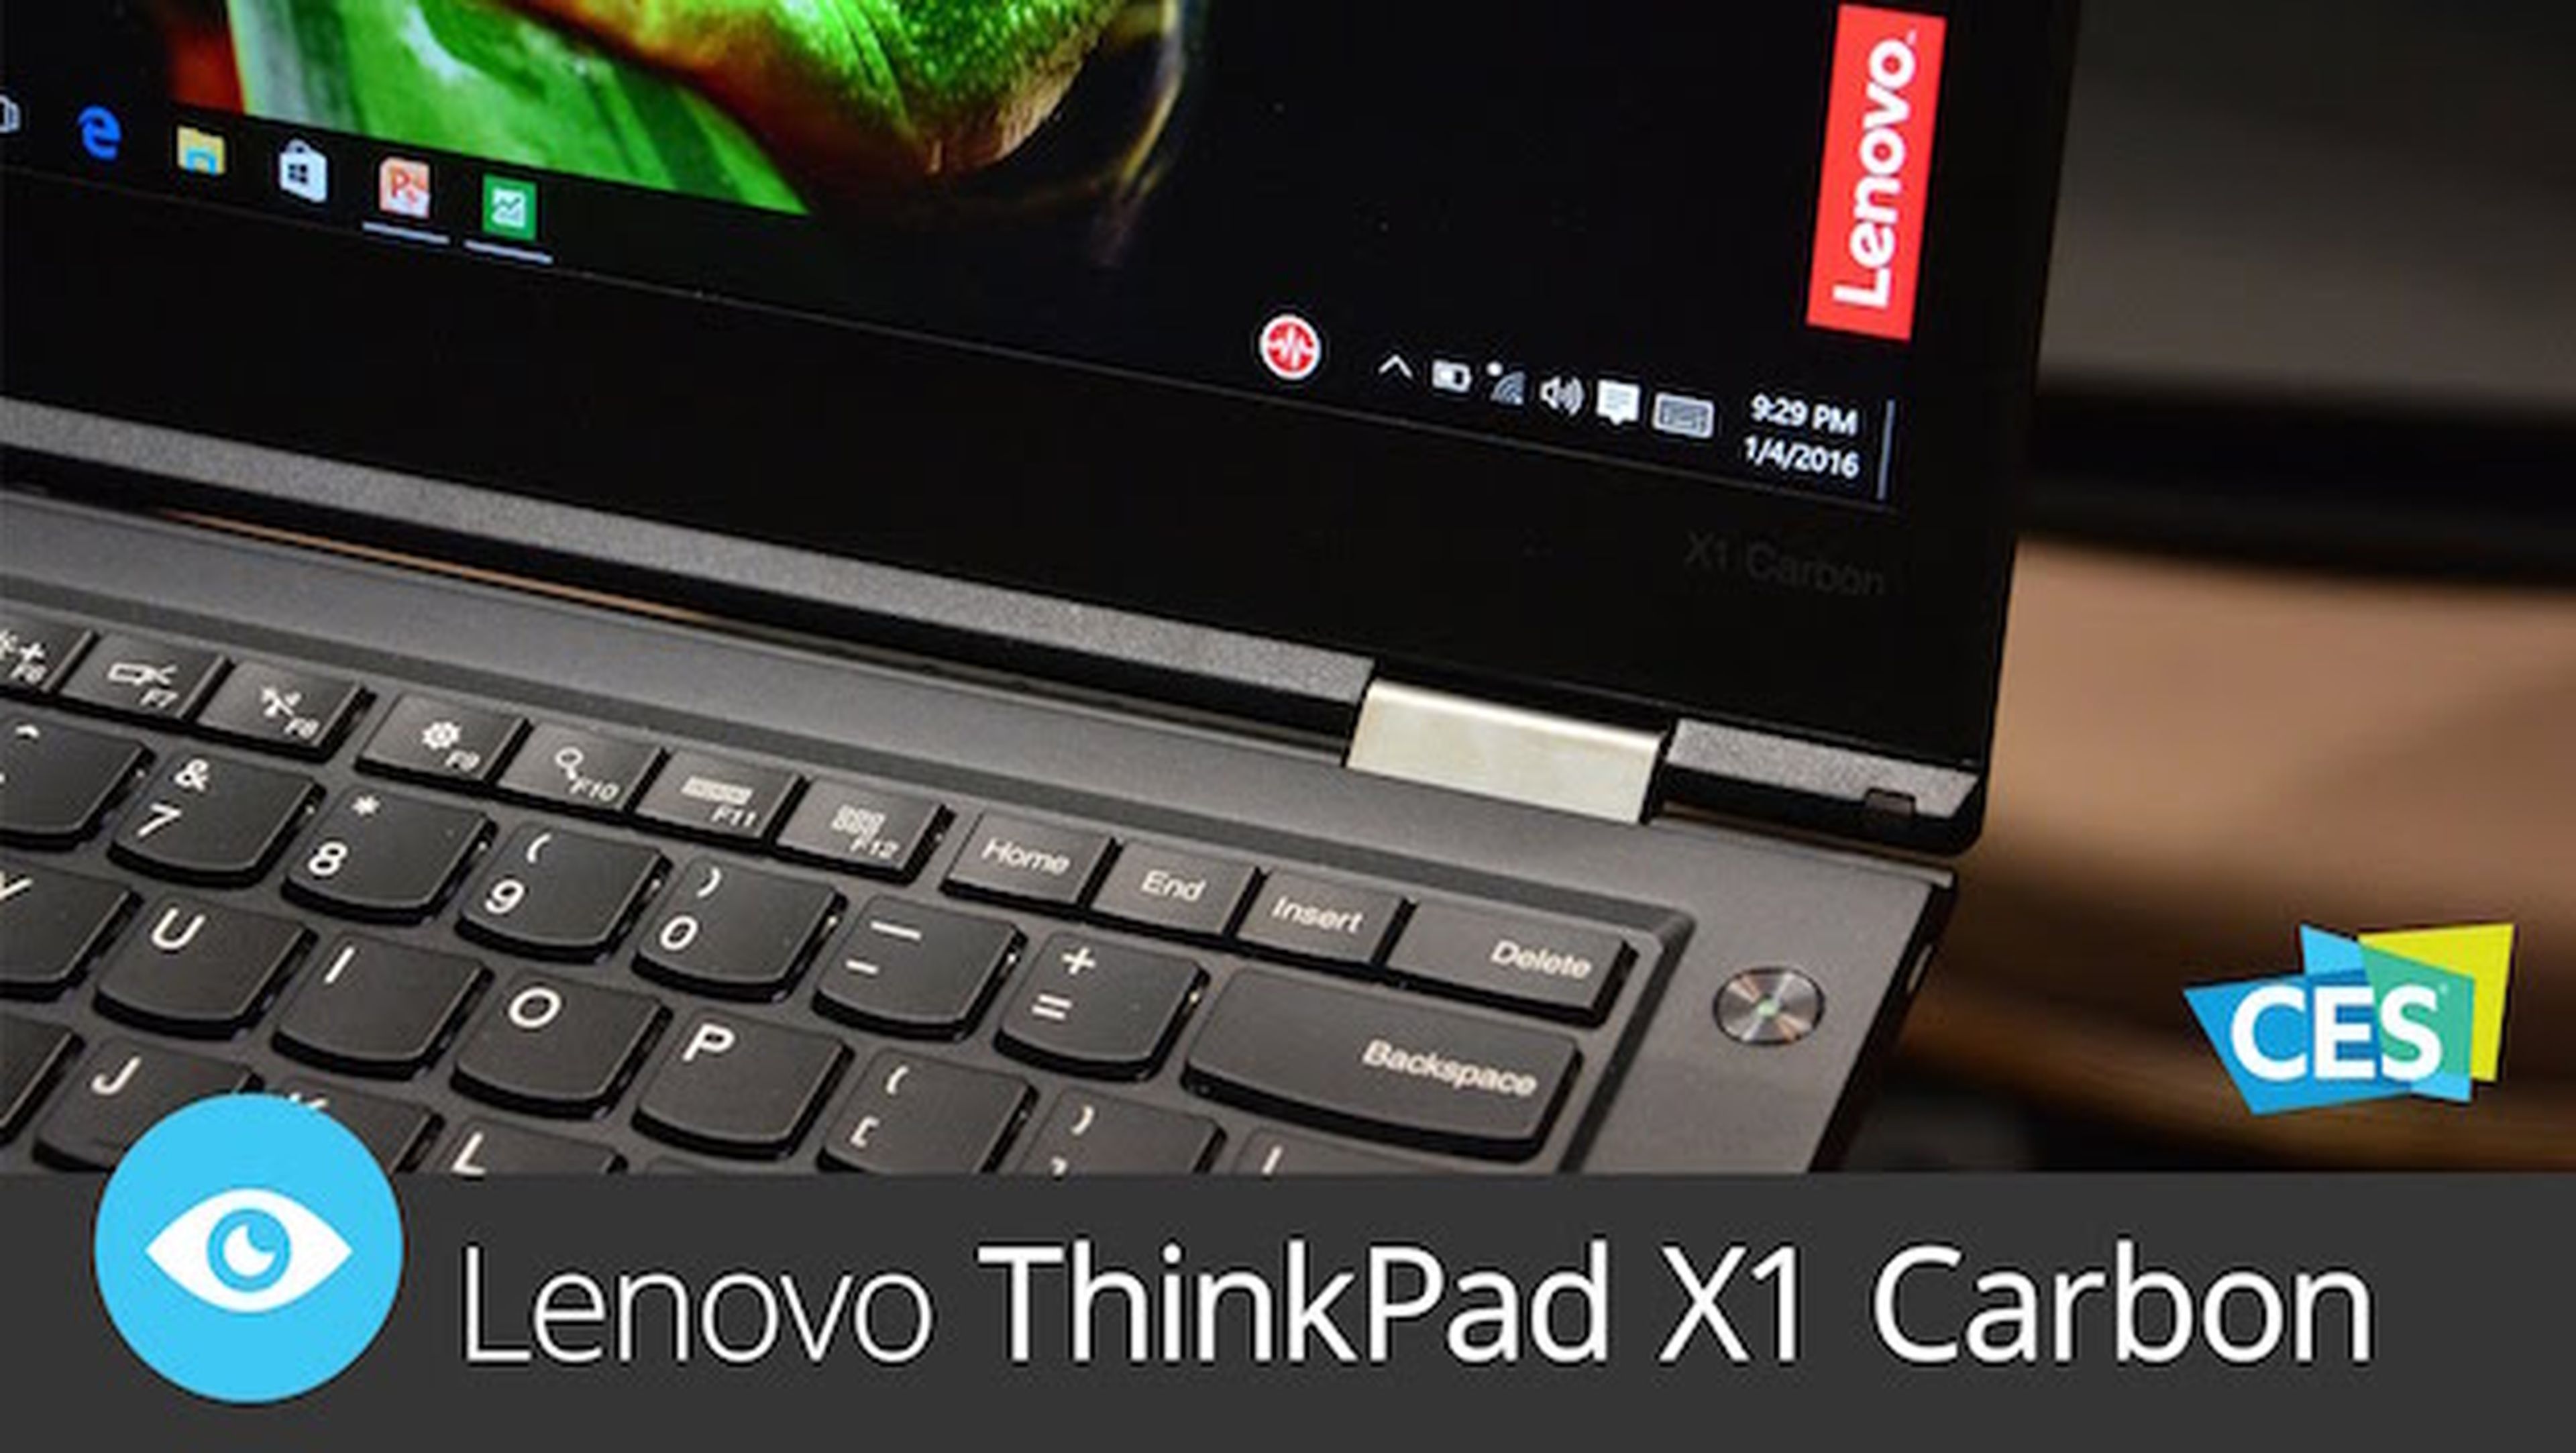 Nuevo Lenovo Thinkpad x1 Carbon llega a España